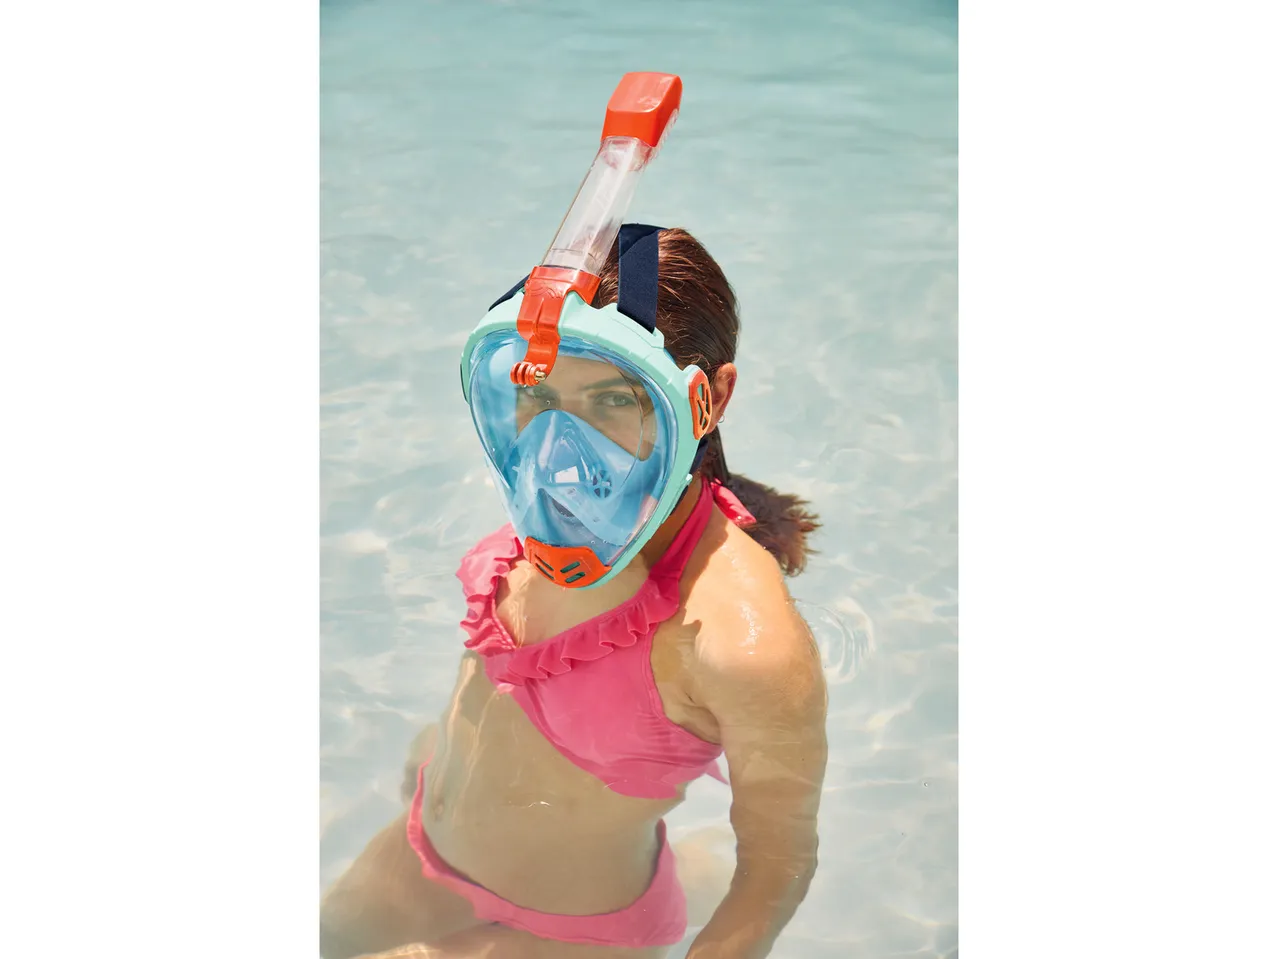 Maschera per snorkeling , prezzo 24.99 EUR 
Maschera per snorkeling Misure: S-XL ...